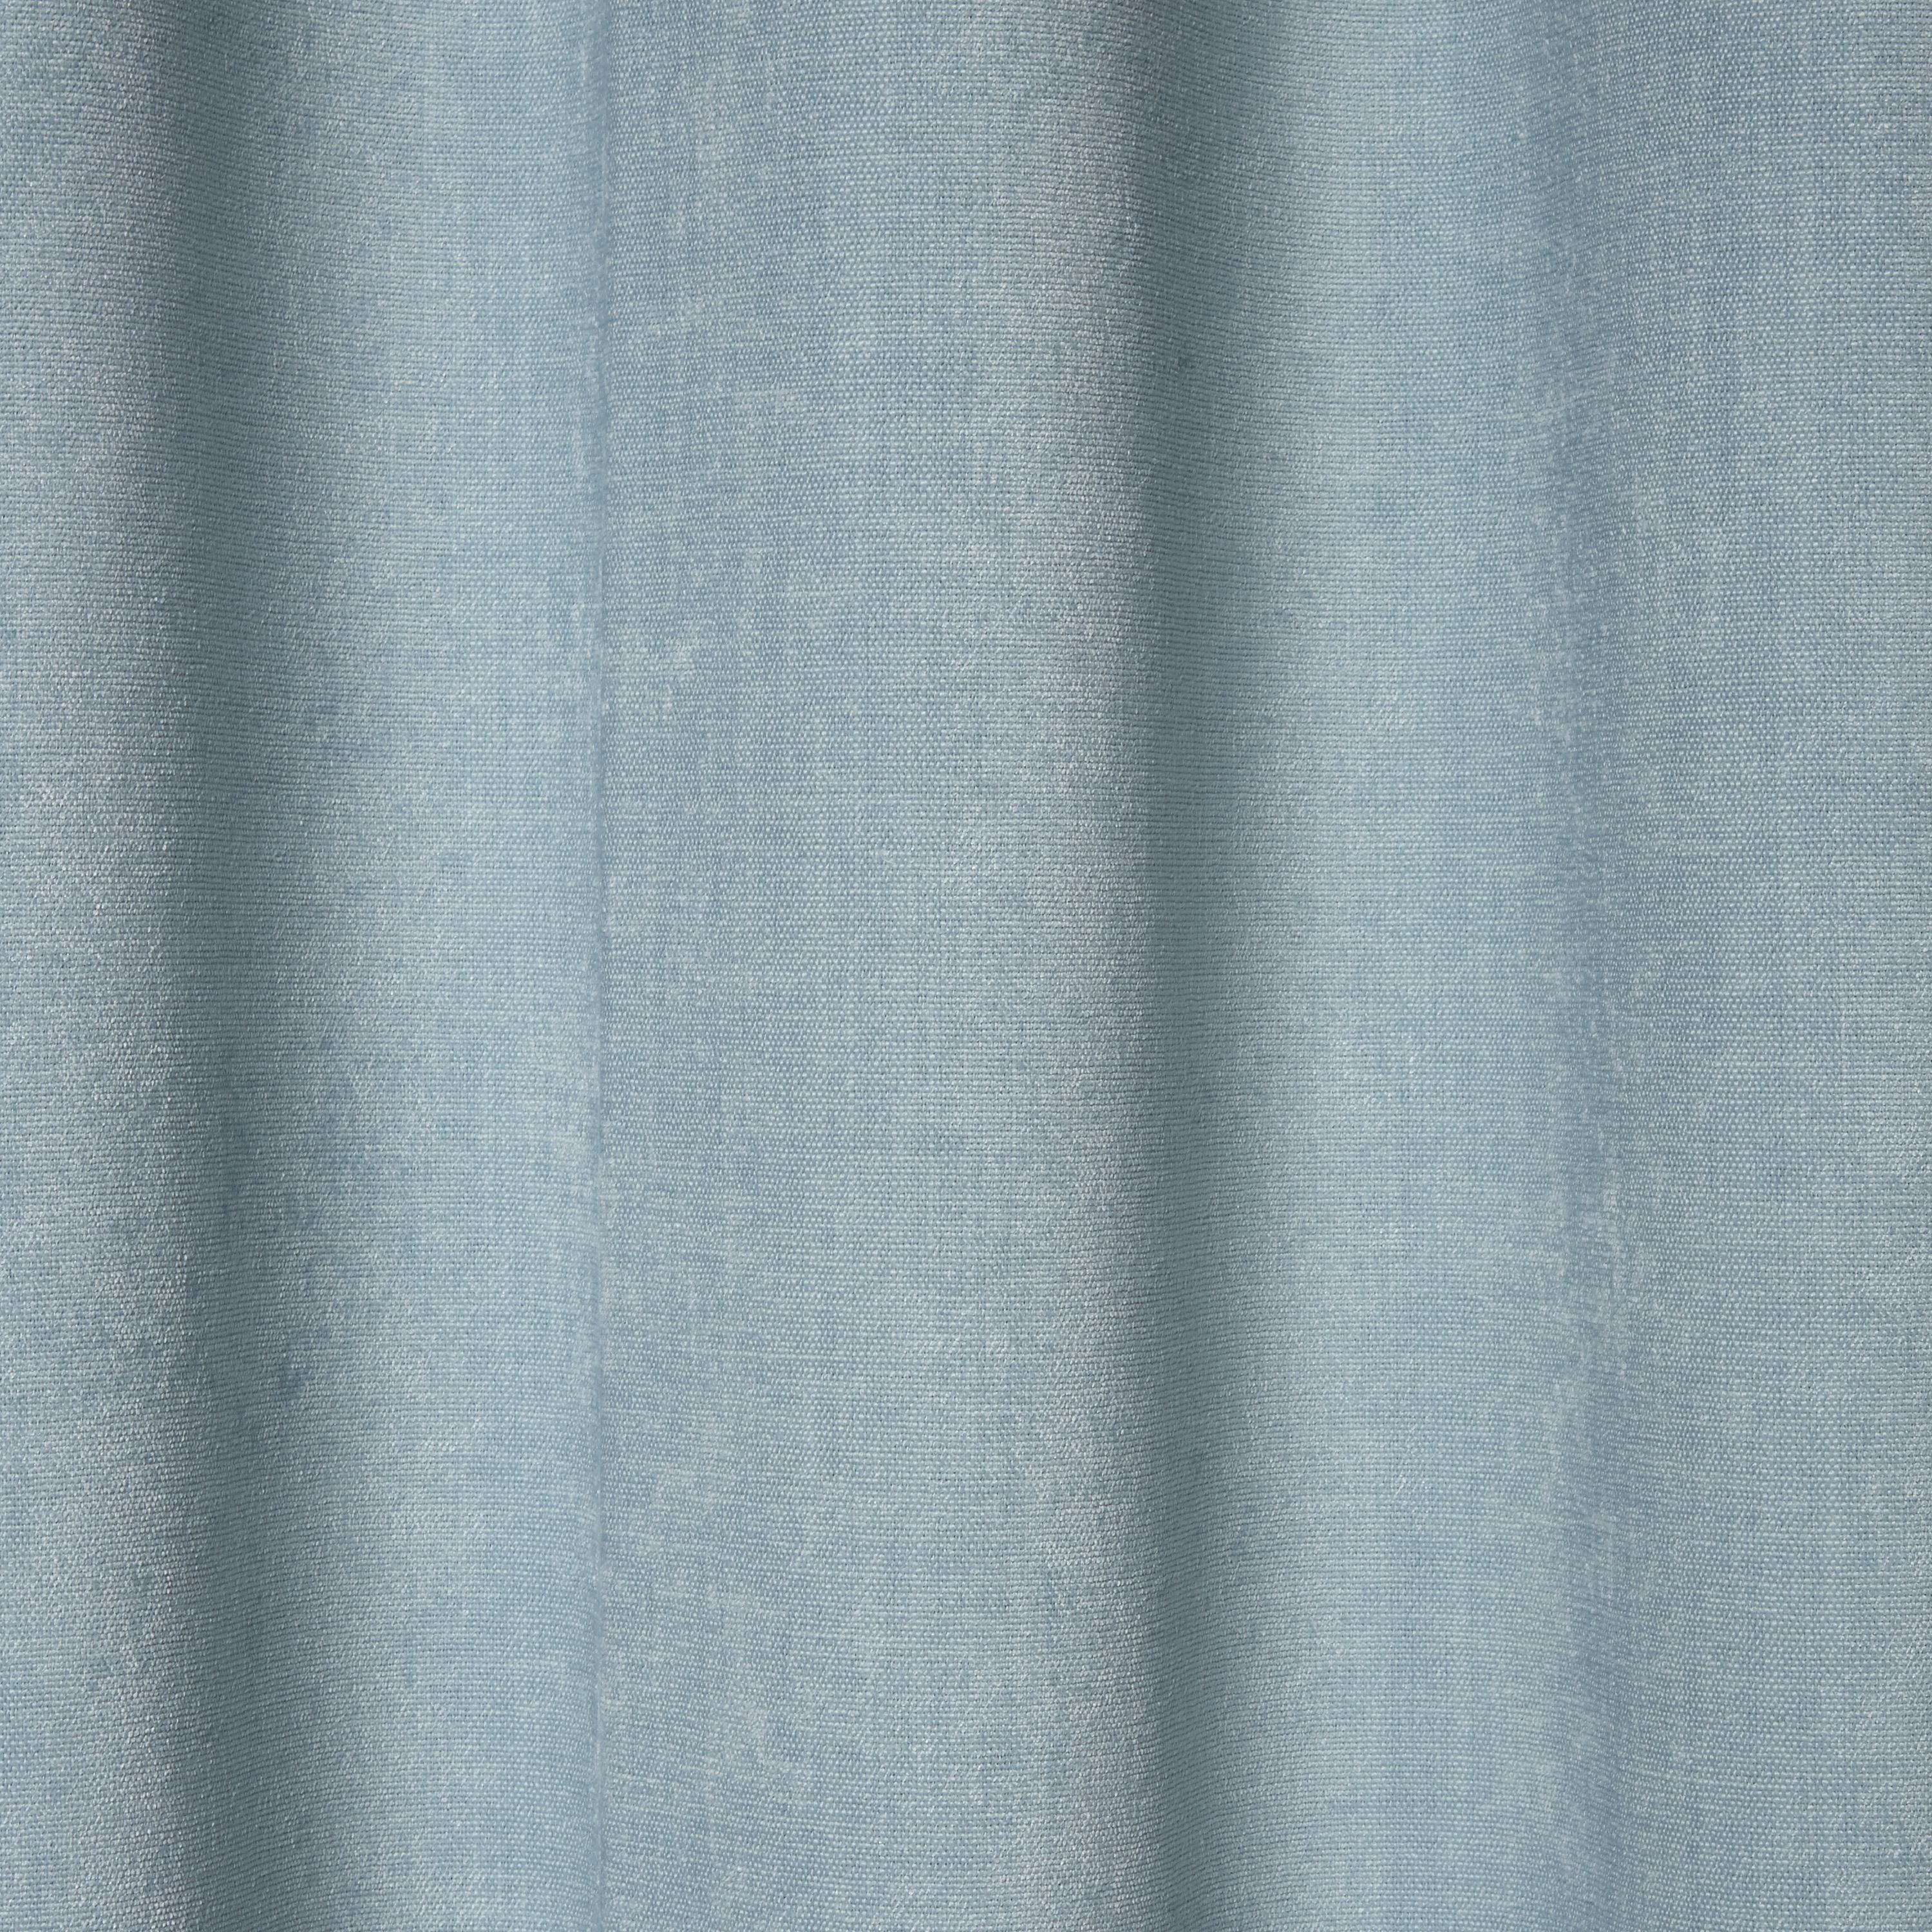 Pahea Blue green Chenille Unlined Eyelet Curtain (W)167cm (L)228cm, Single